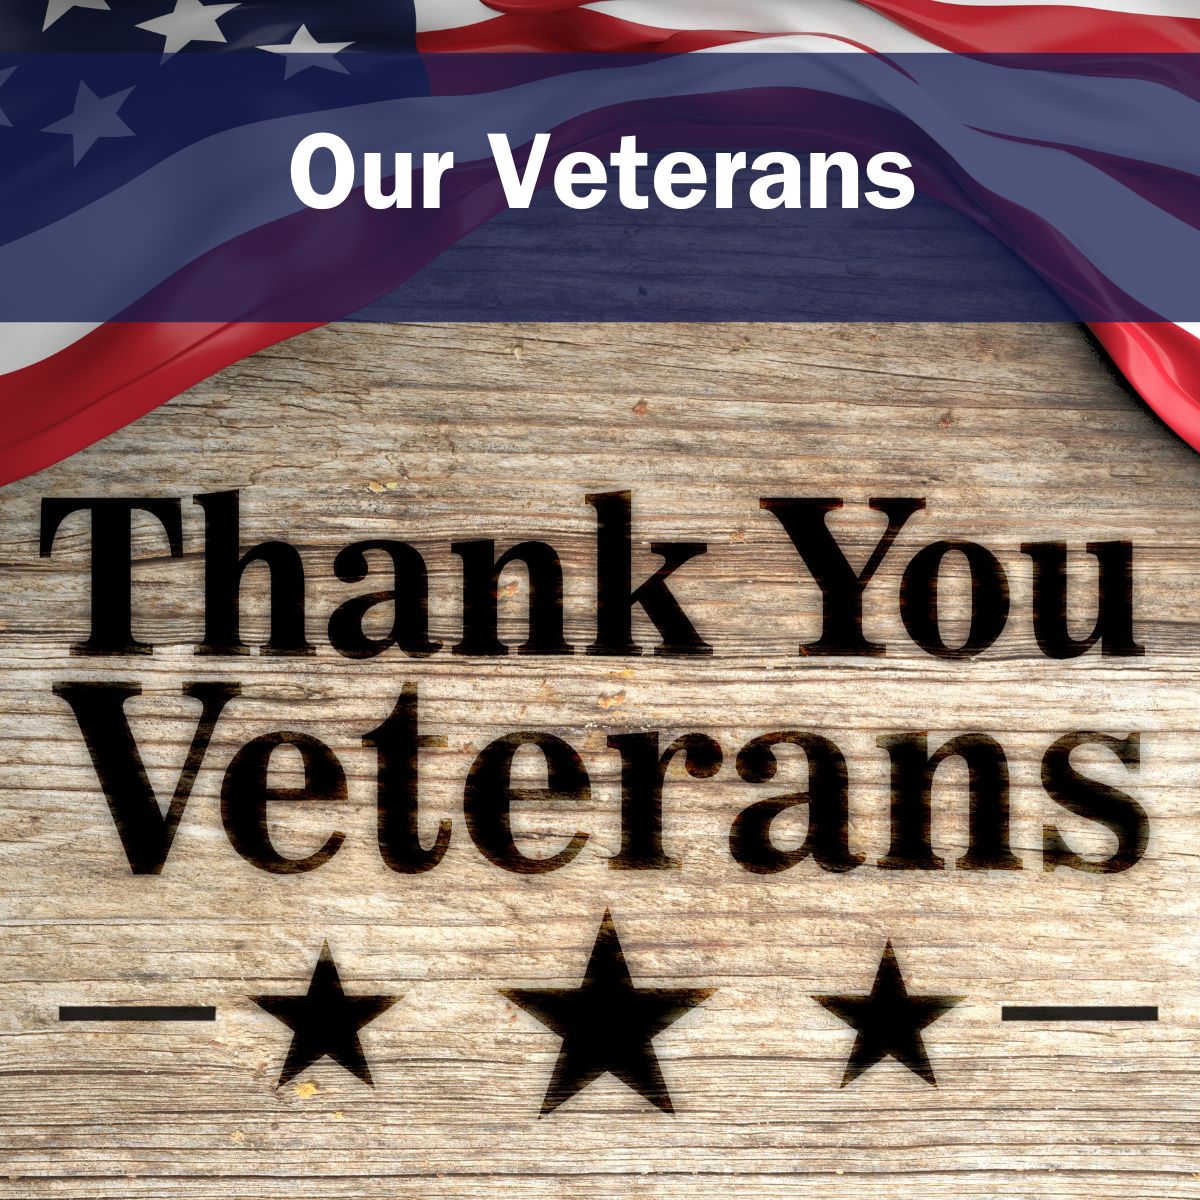 Our Veterans